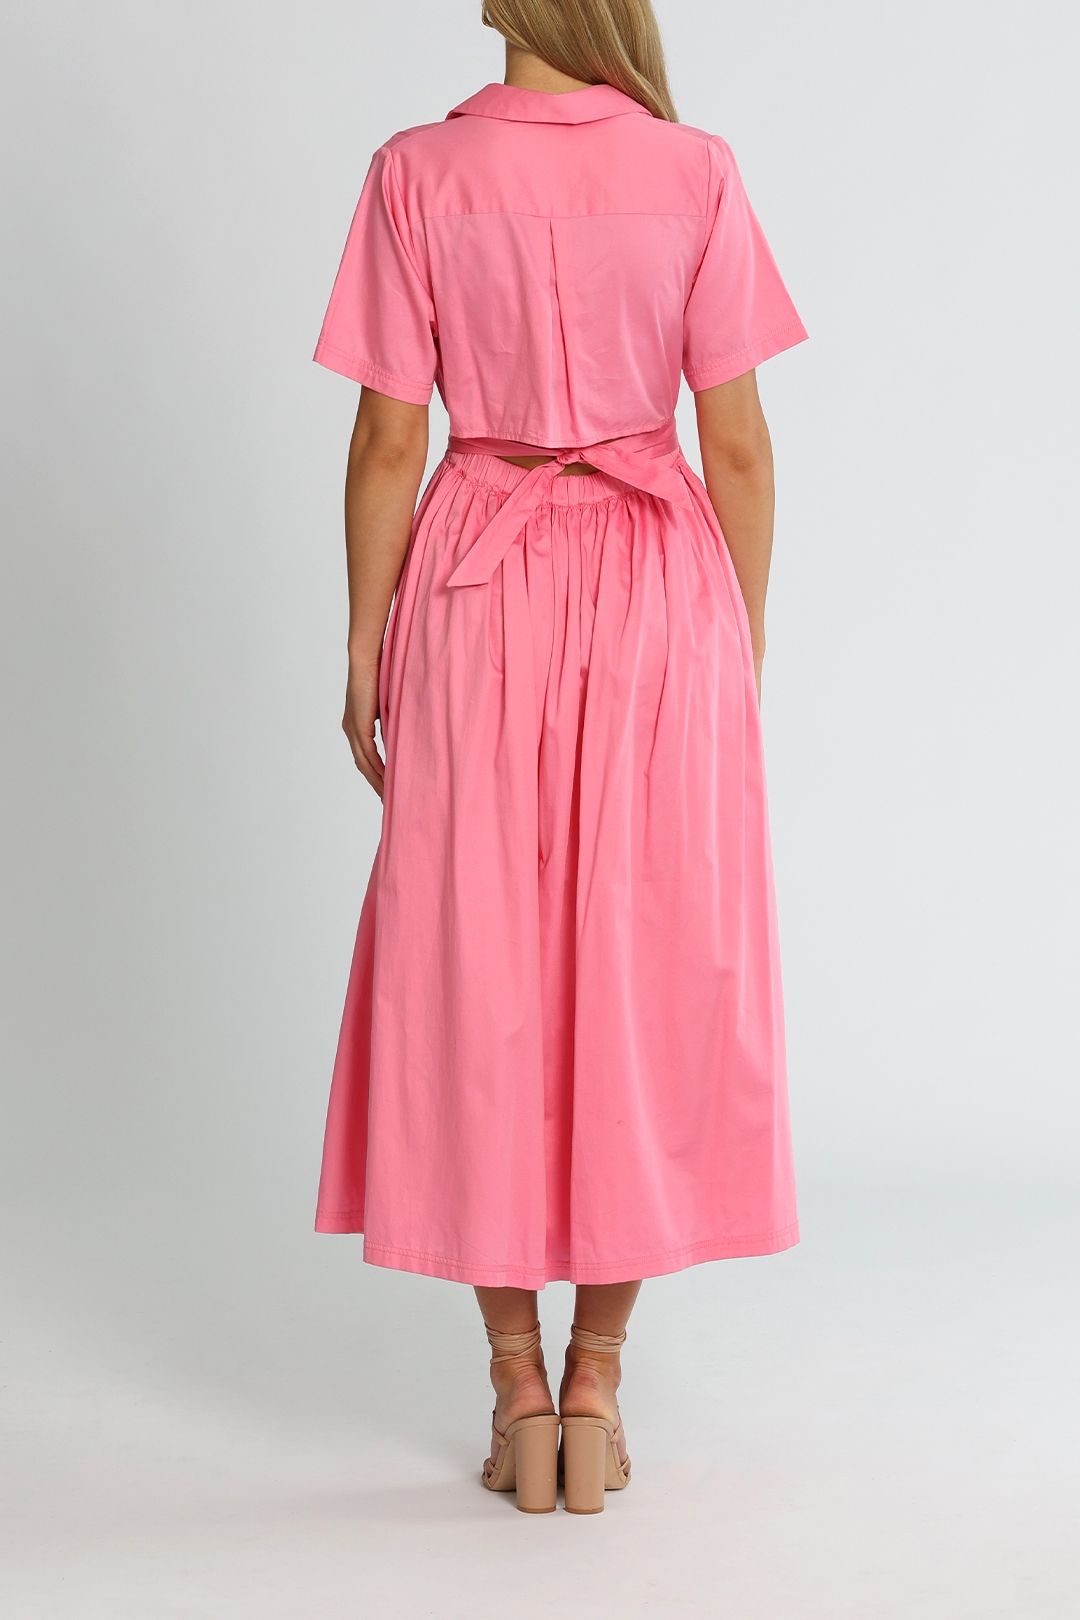 Steele Isadora Dress Pink Cutout